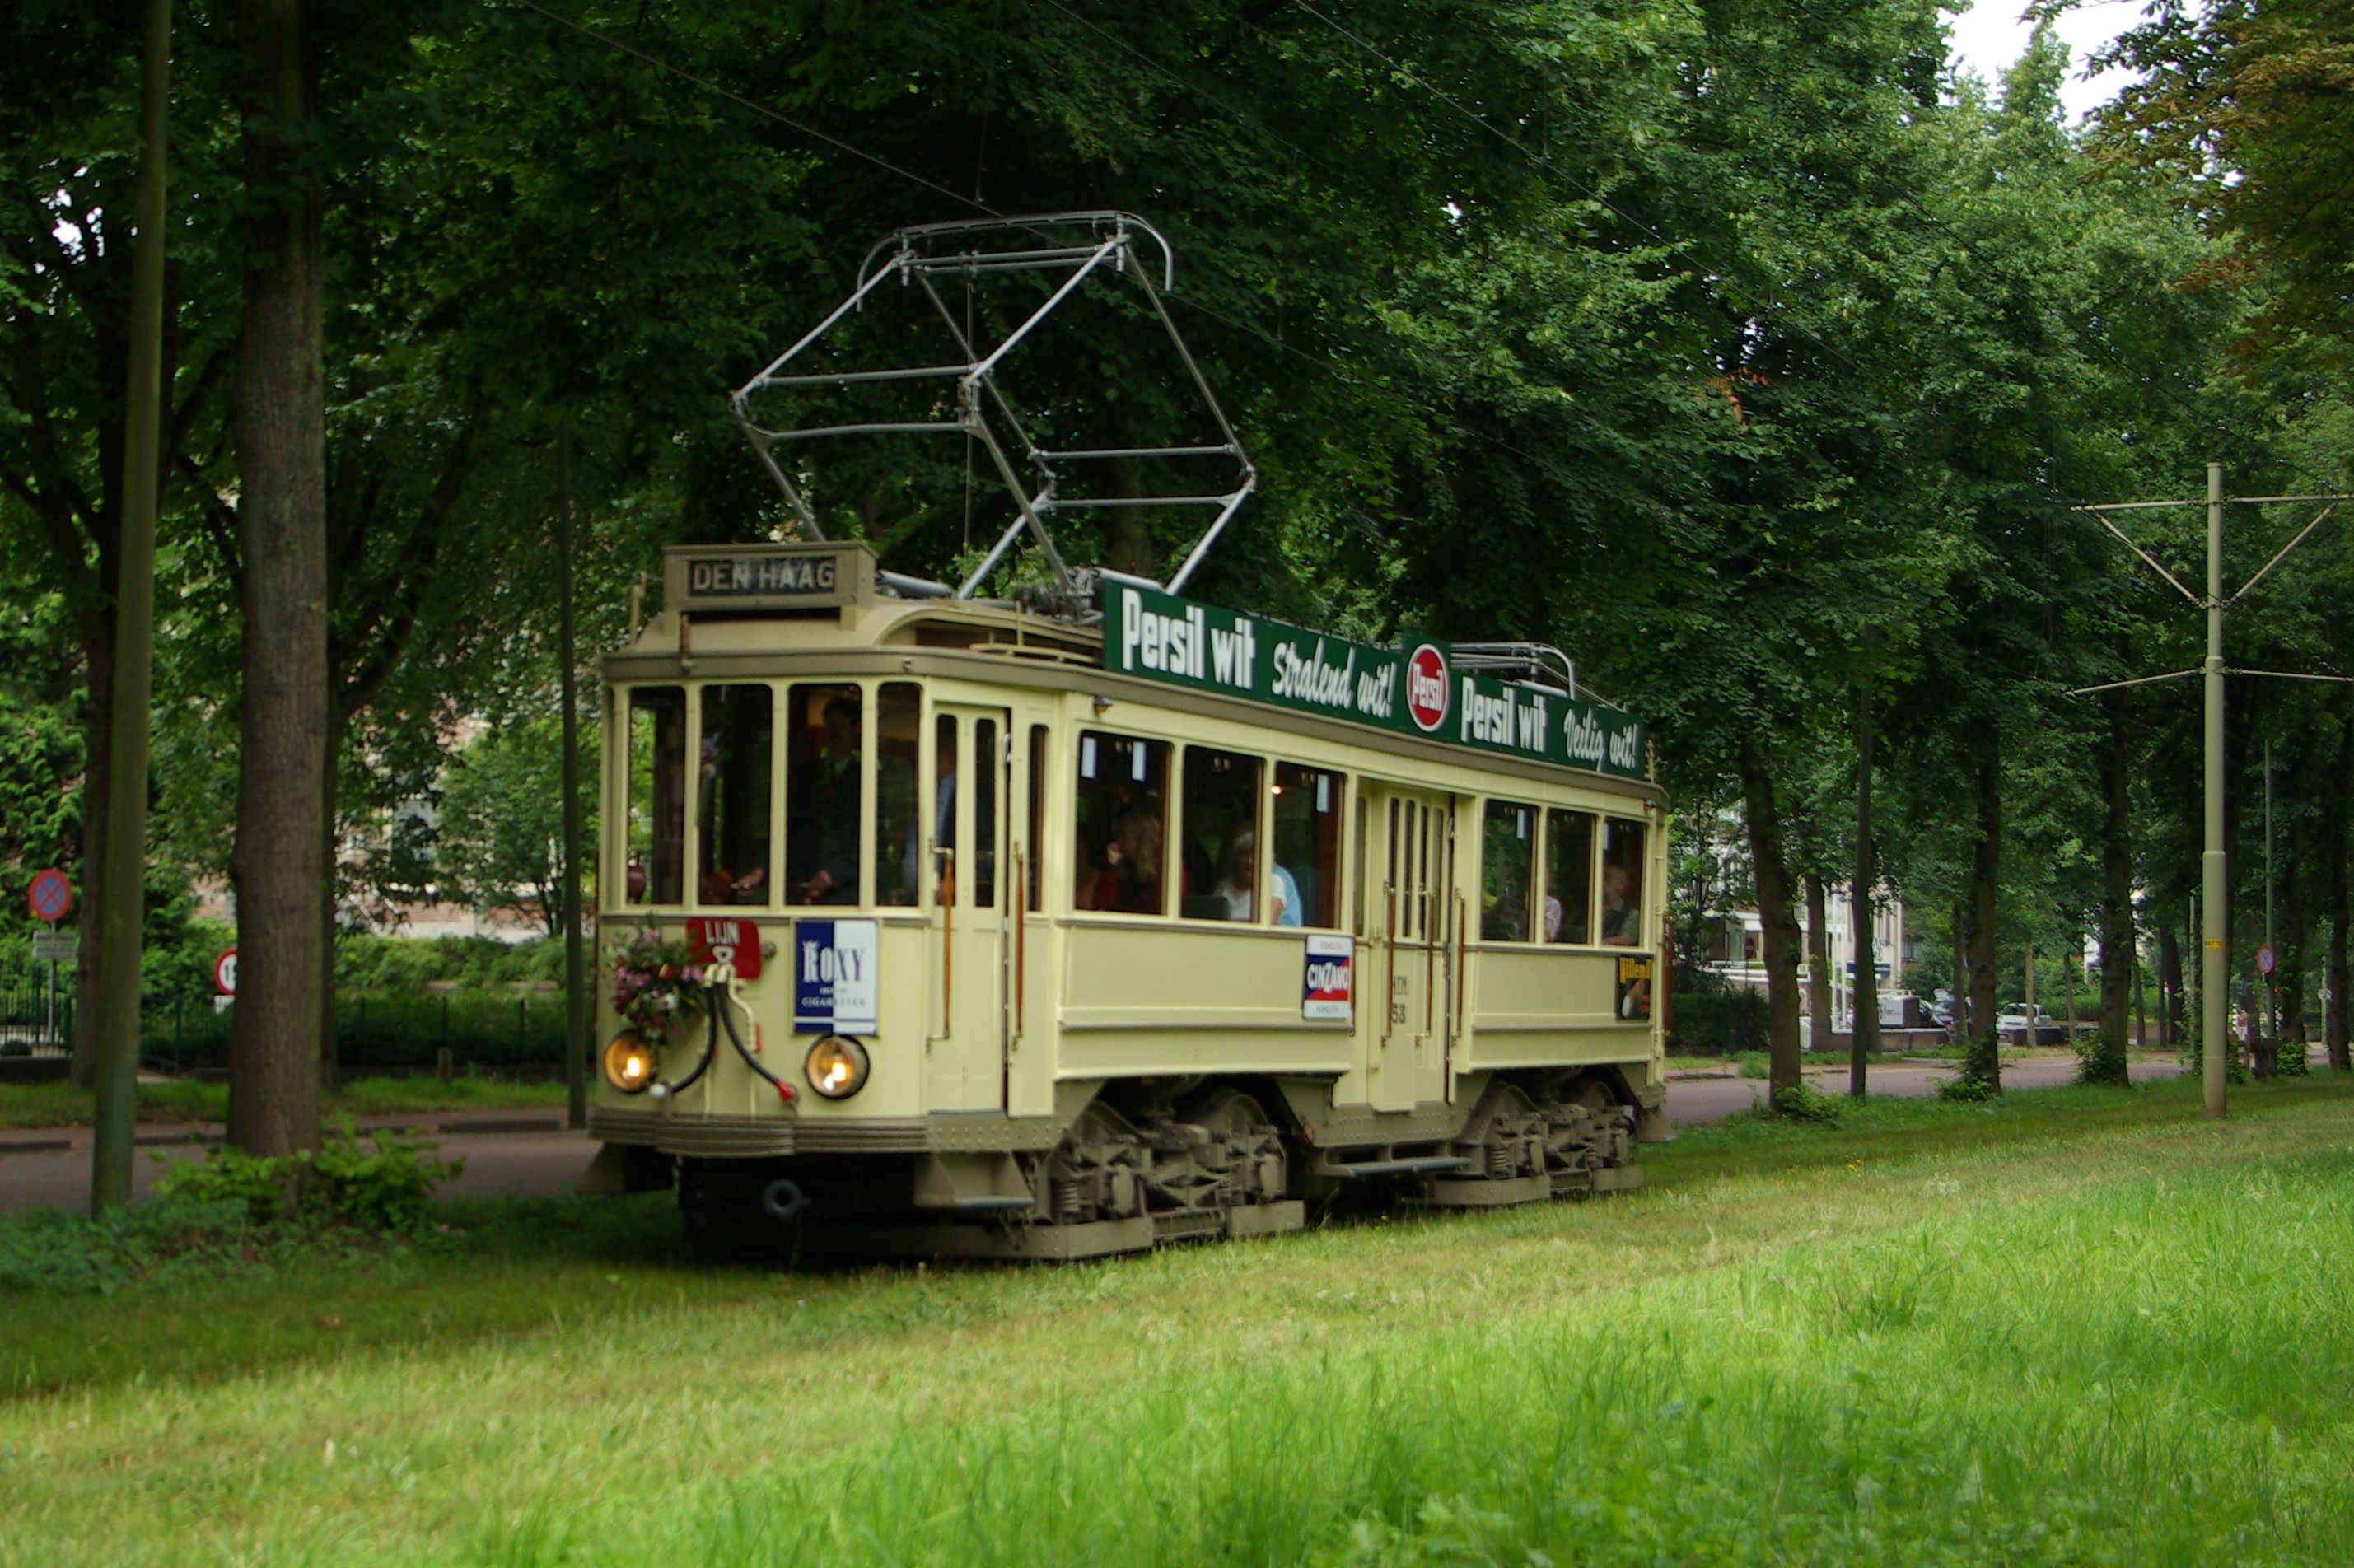 Hague 50 series tram